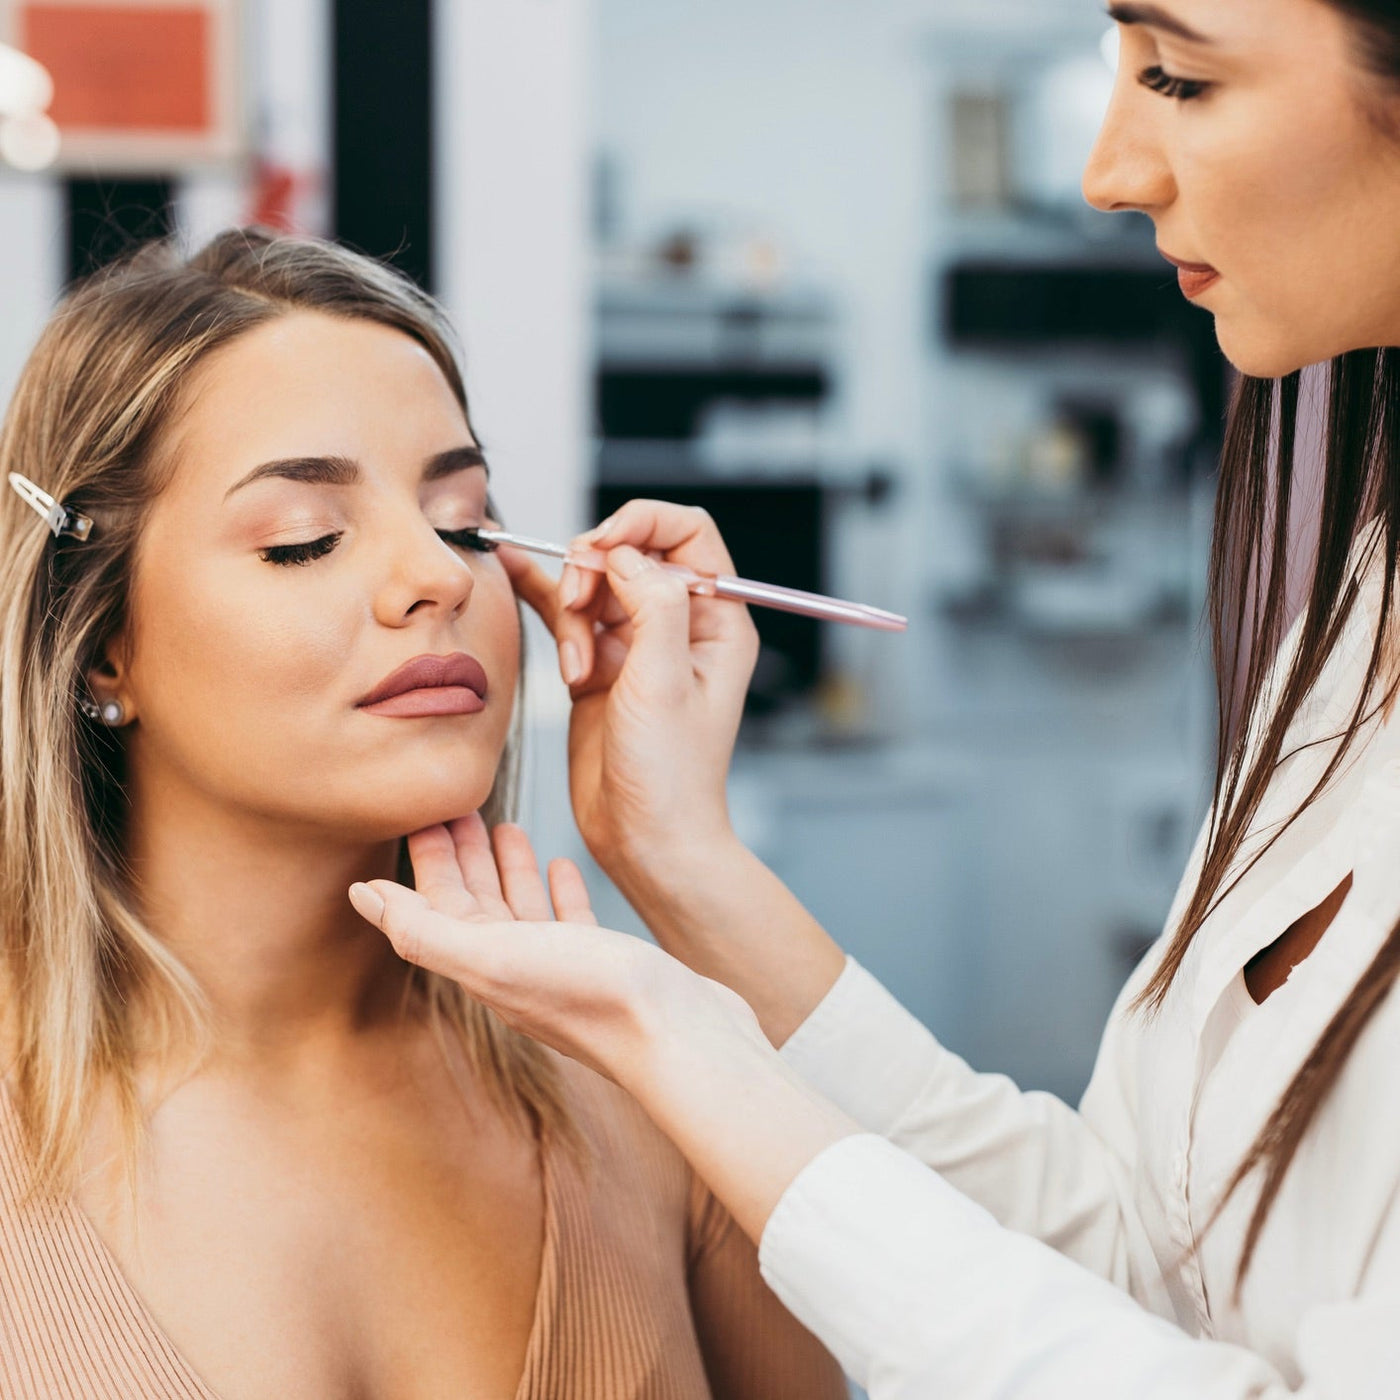 Makeup artist applying eye makeup to woman using a brush.